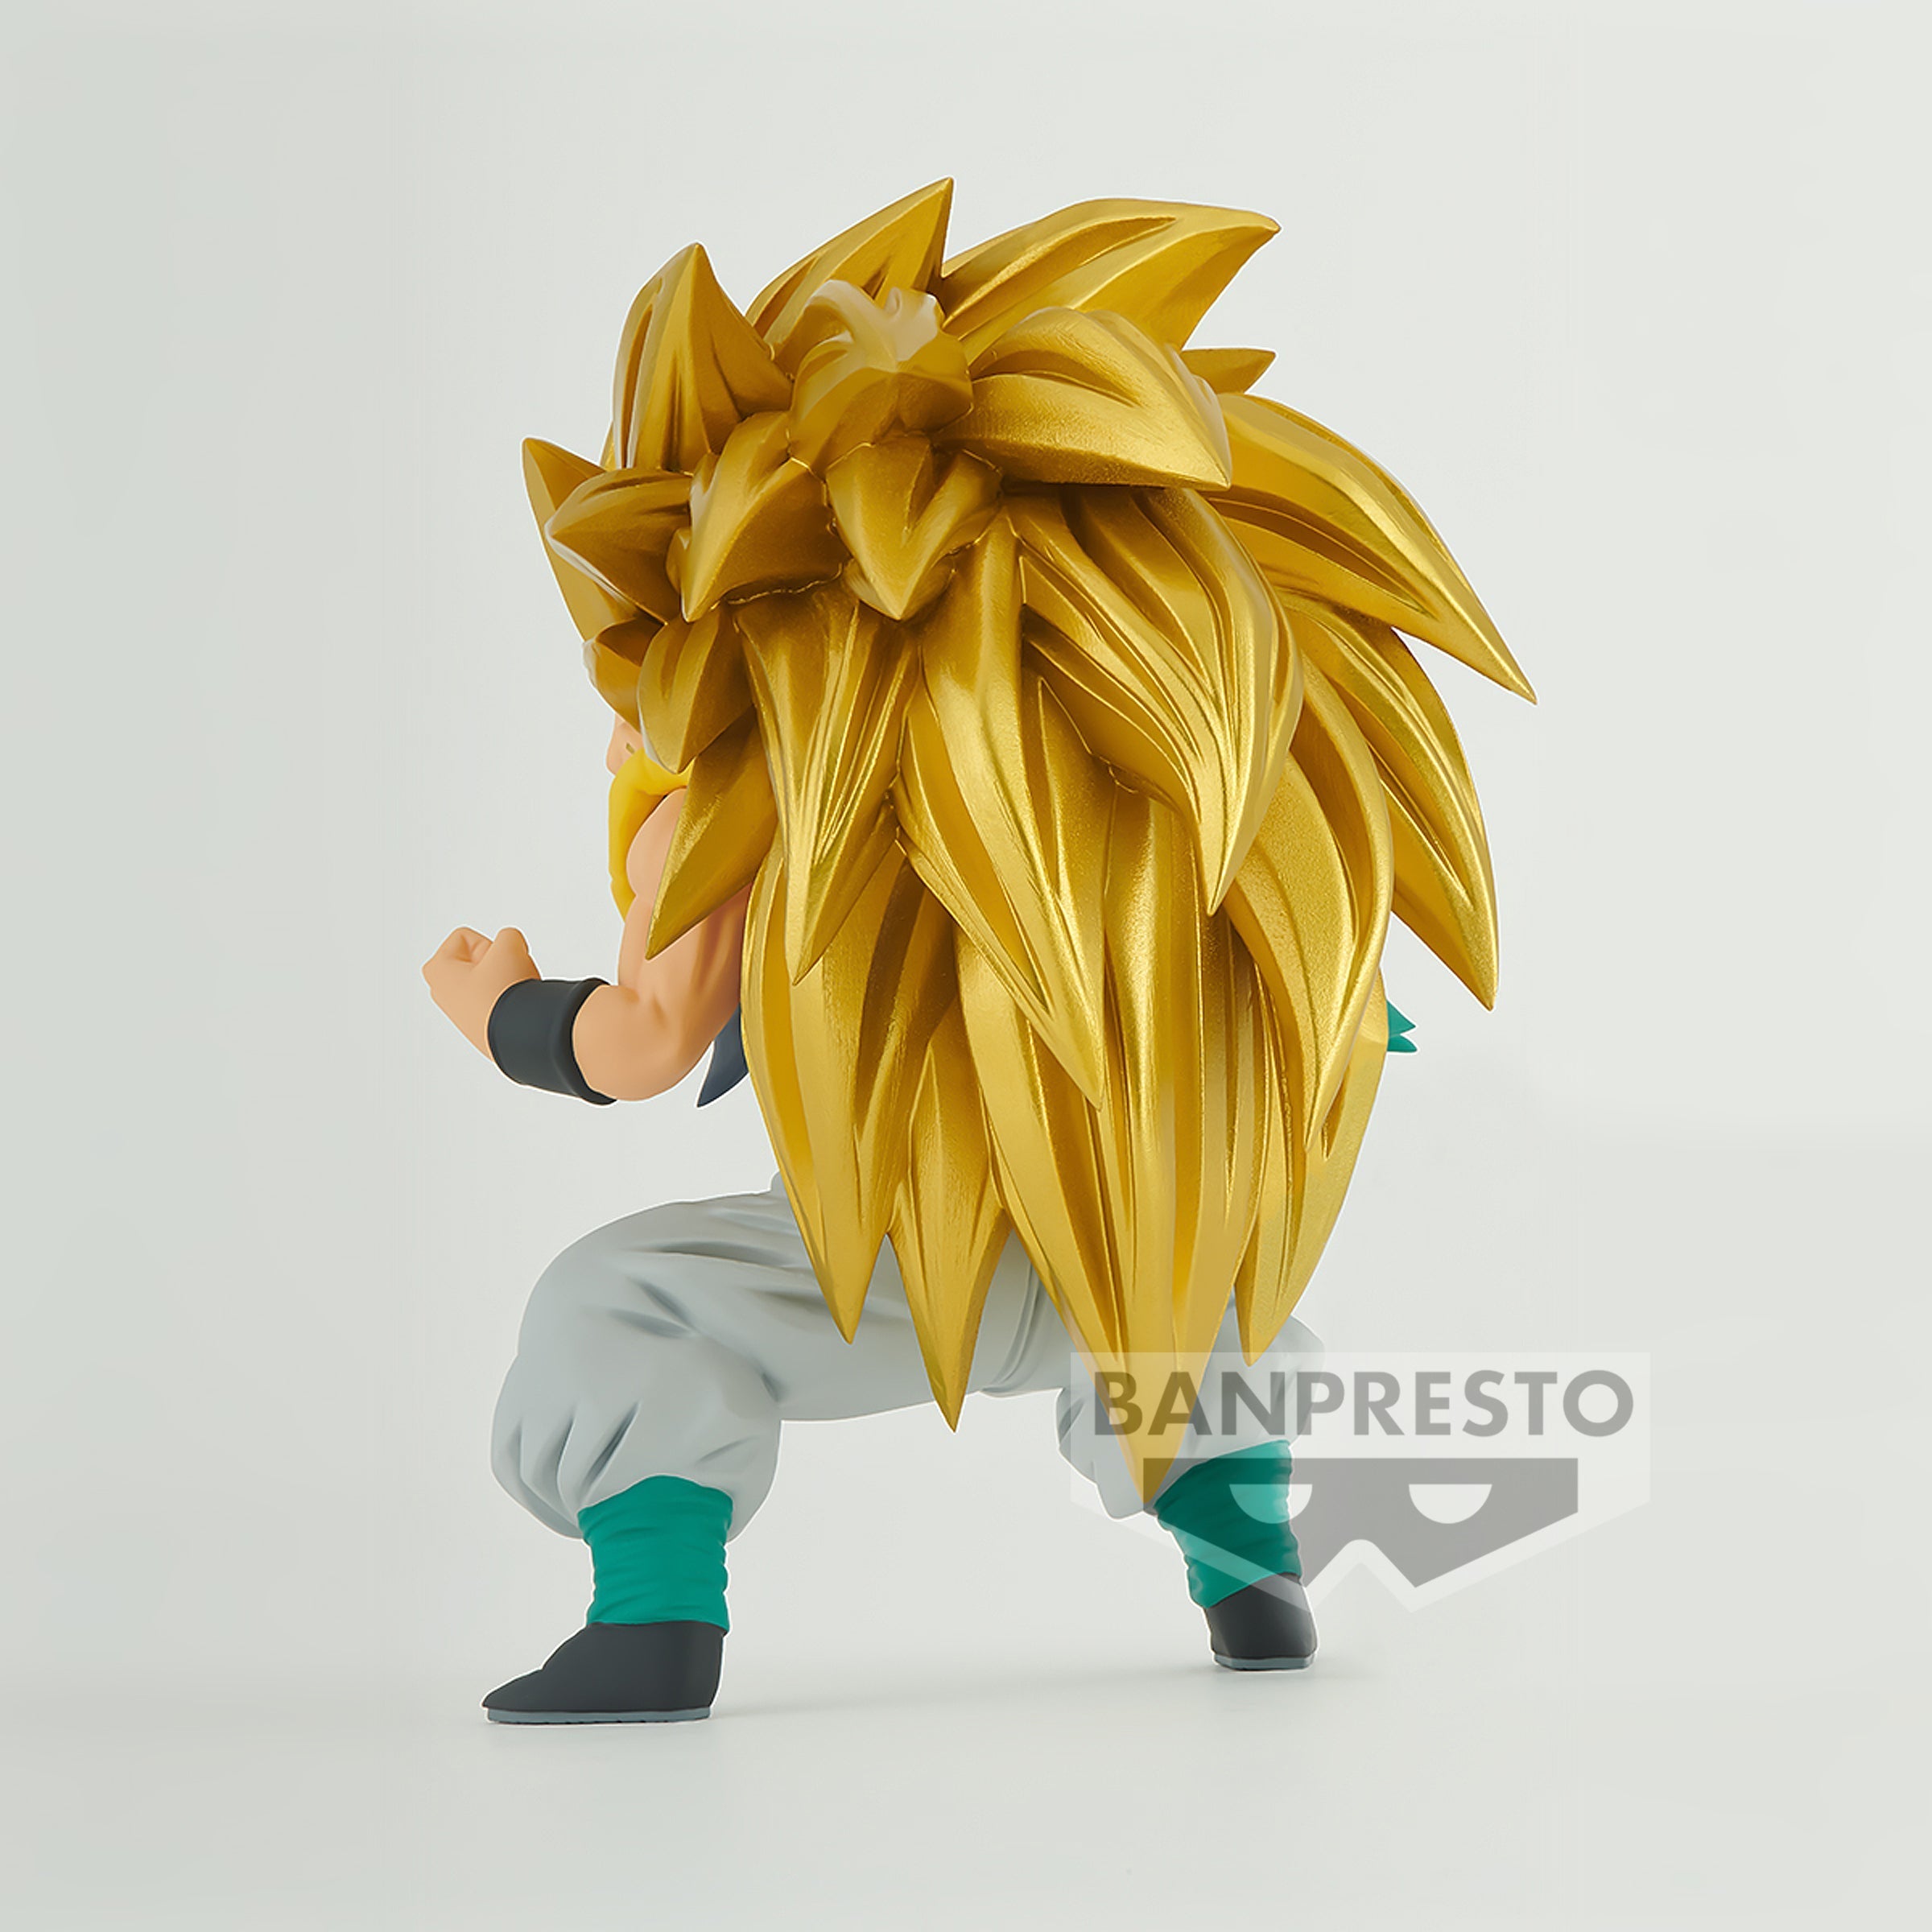 Dragon Ball Z by Toei Animation Co., Ltd. Super Saiyan Goku in Saiyan  Battle Armor PAN Animation Cel with Hand-painted Original Background  穿撒亞人戰鬥服的超級撒亞人孫悟空（移動定位